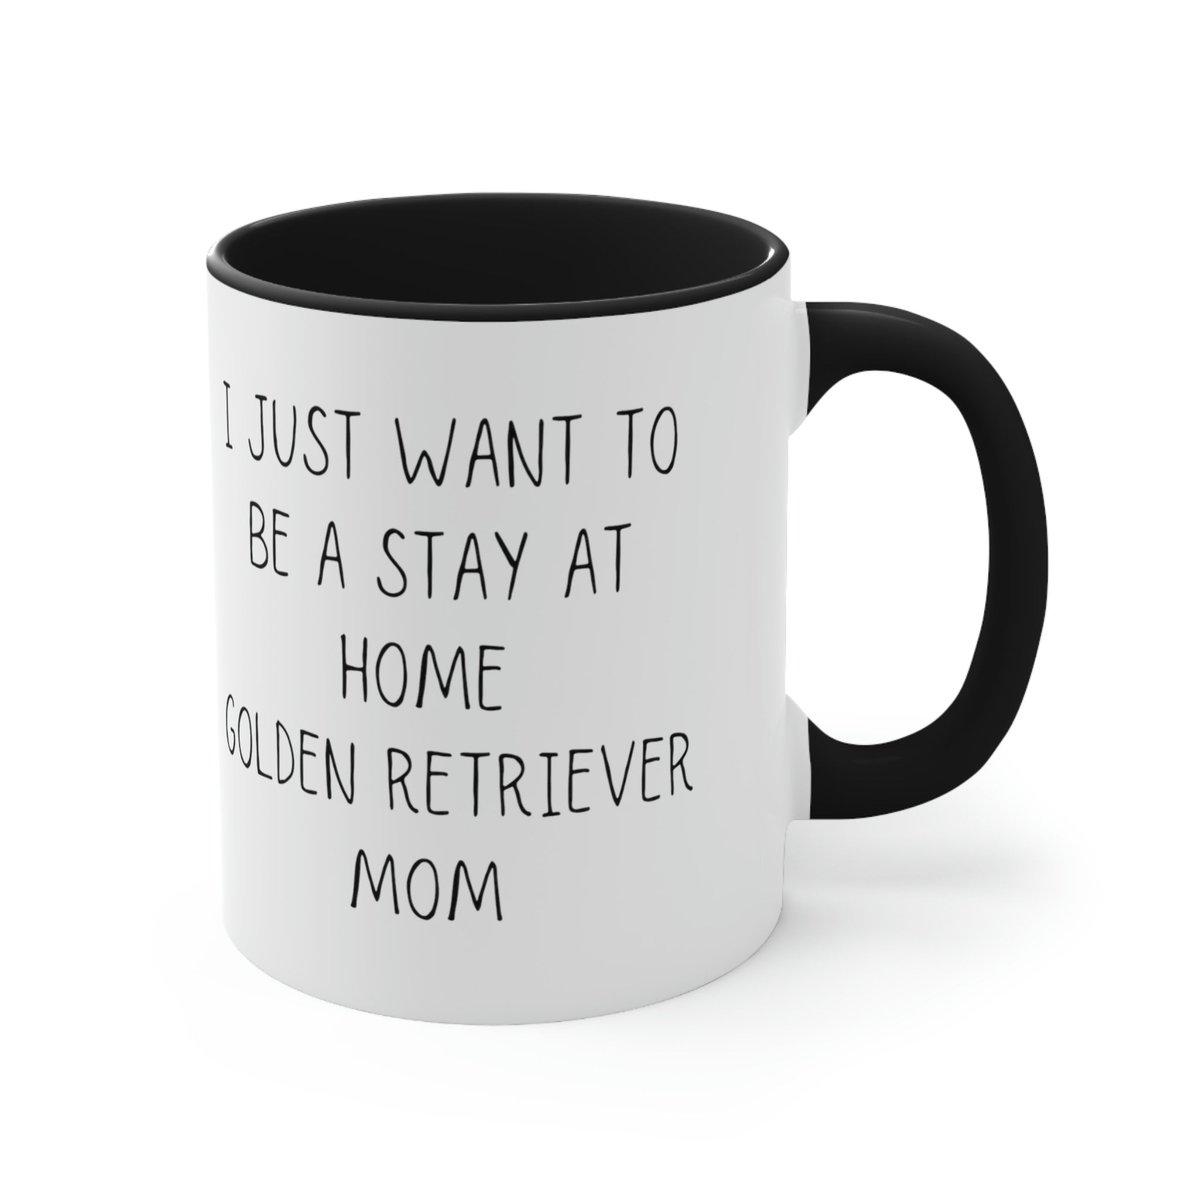 Funny Golden Retriever Mom Gift Mug #goldenretriever #goldenretrieverdog #retrievergift #retrievermothersday #goldenretrievermom #goldenretrievermug CLICK HERE TO BUY NOW: etsy.me/40sq3C2